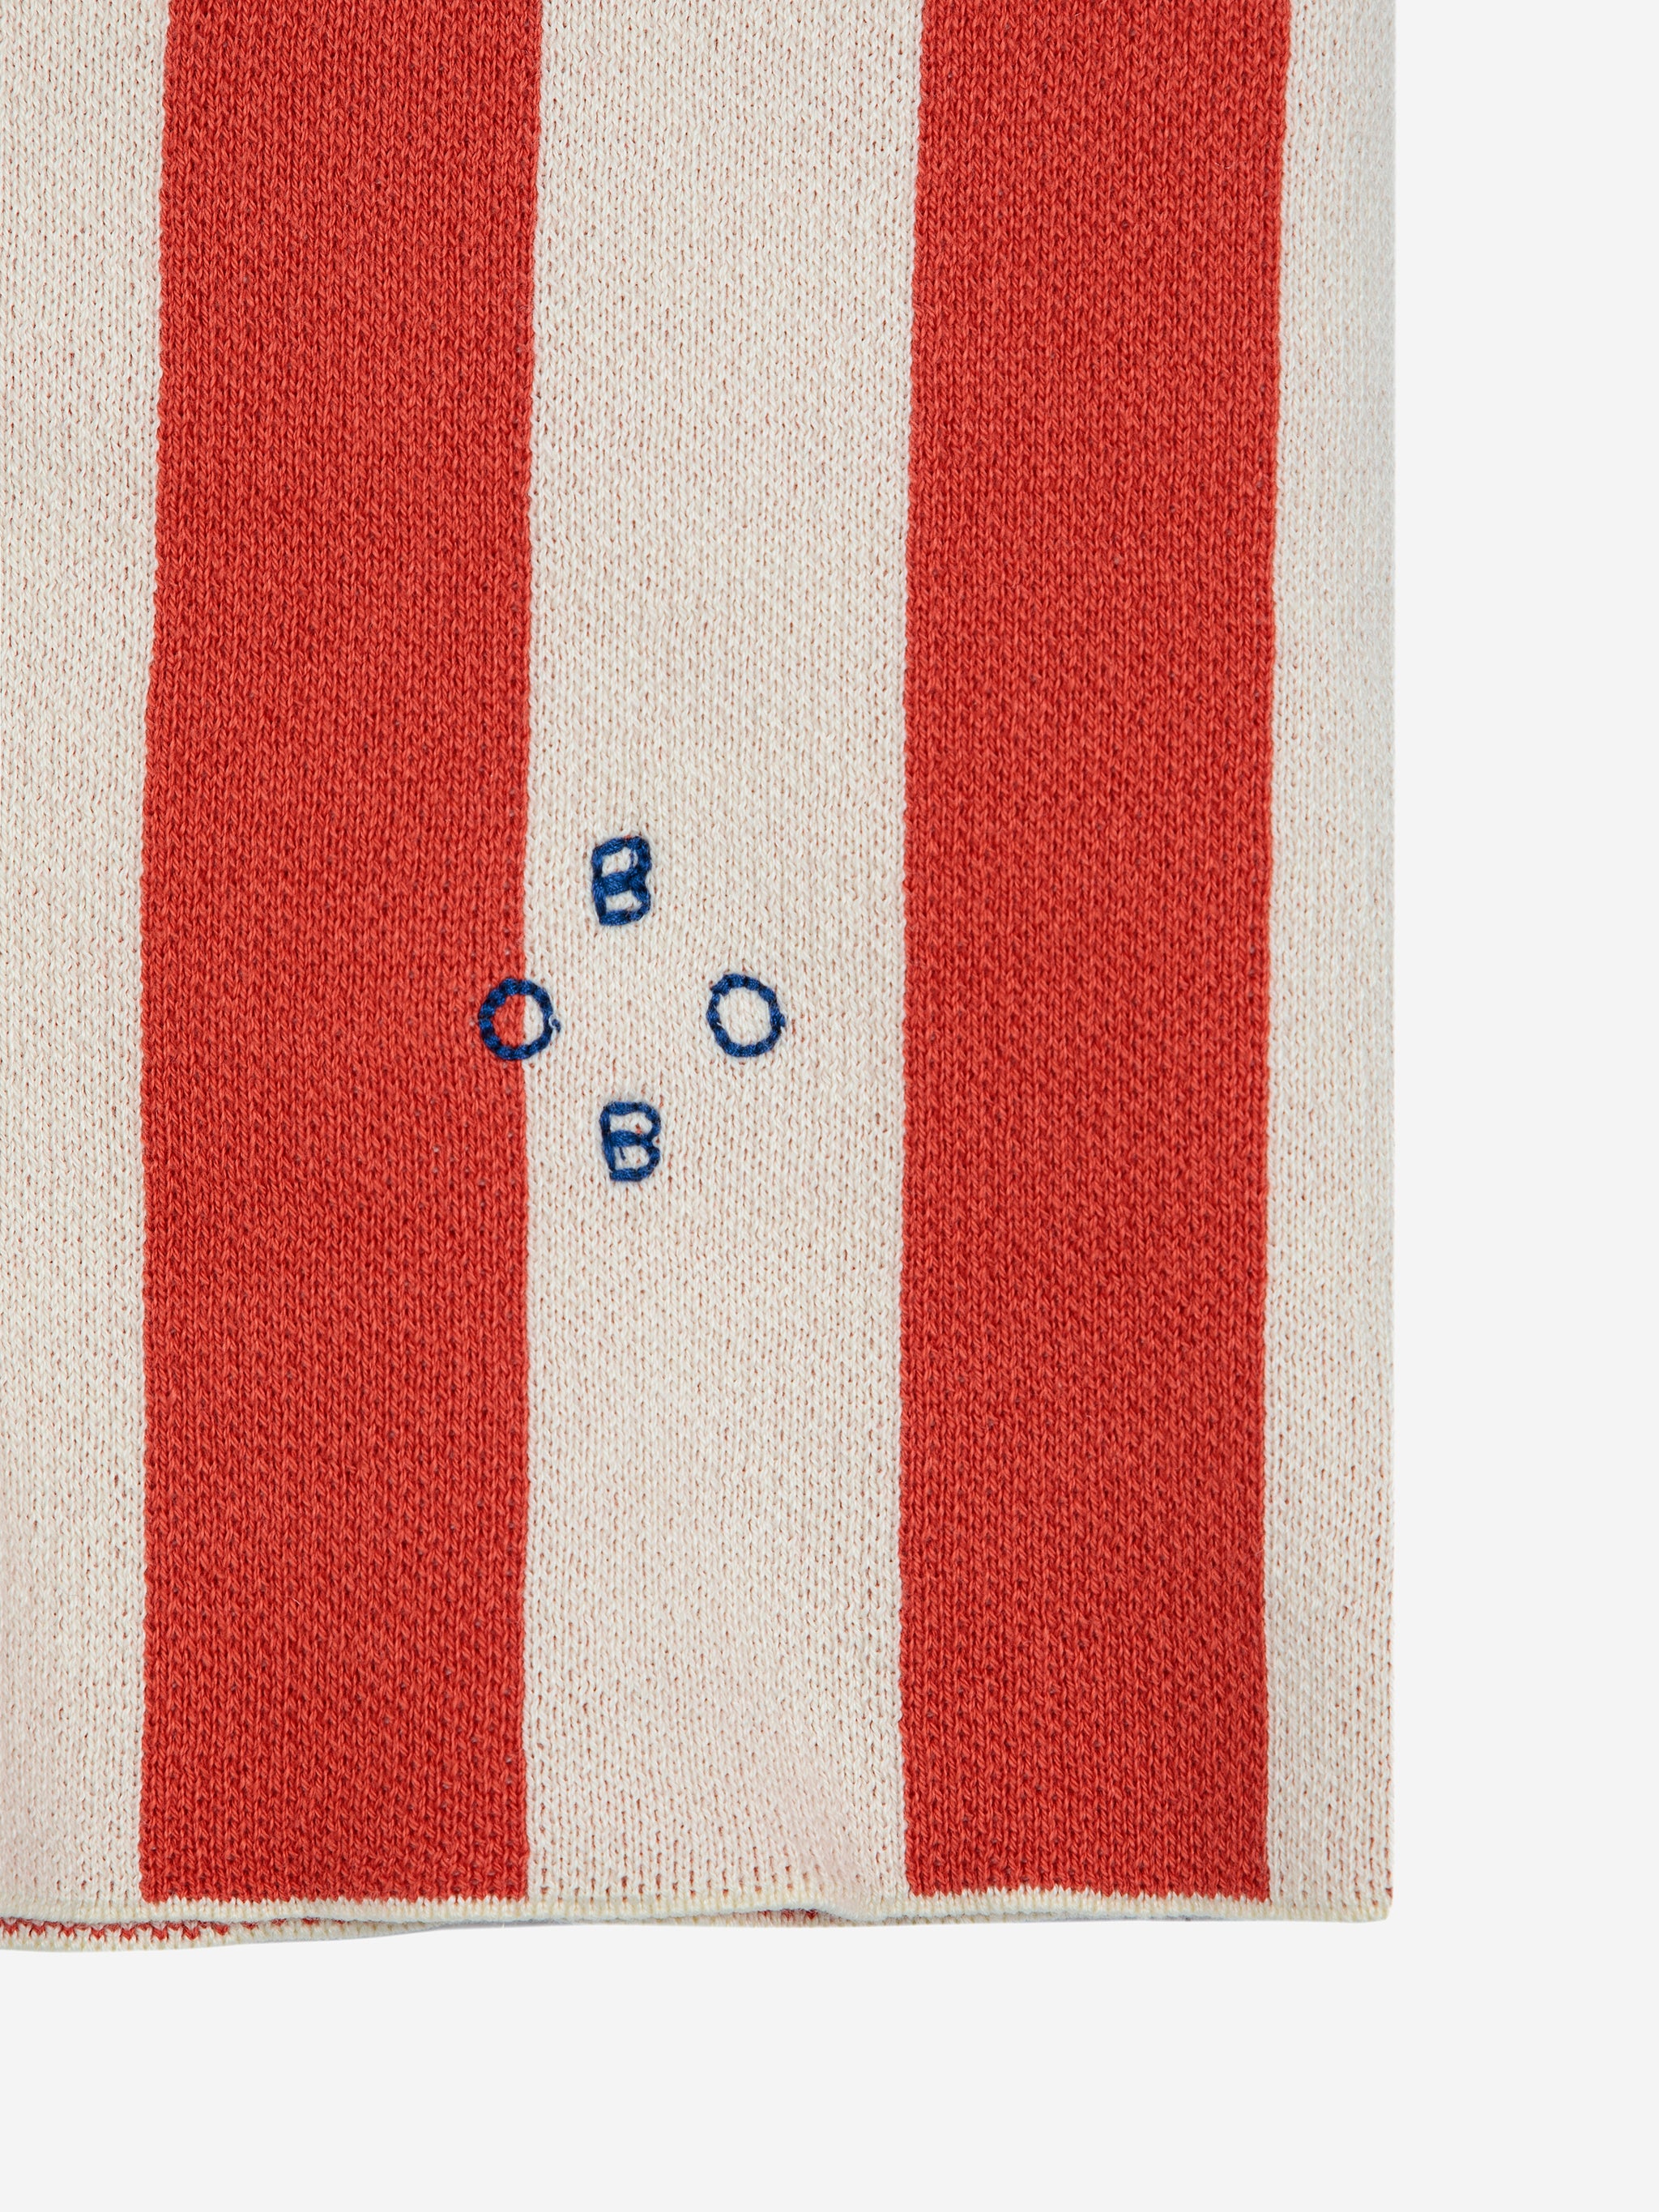 Bobo Choses  Striped knitted short / women